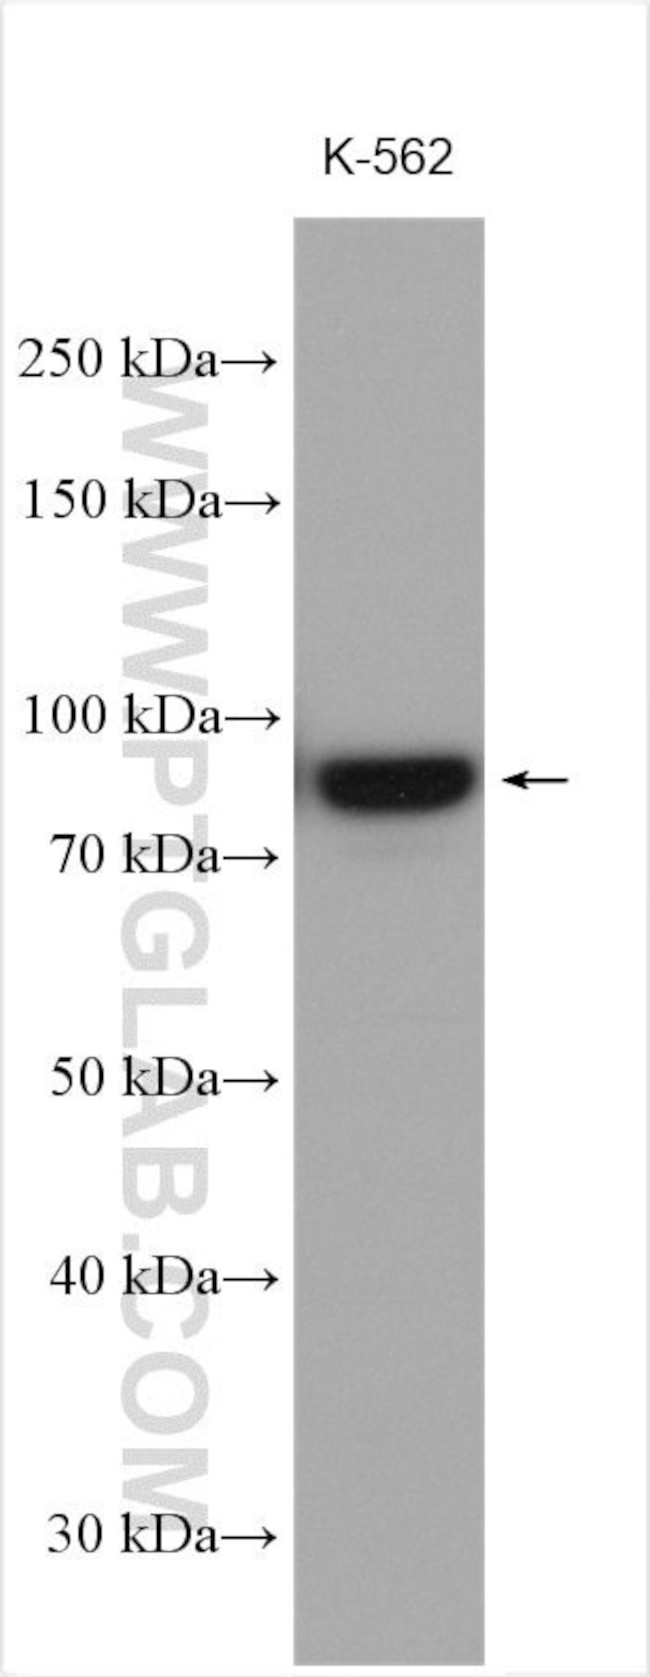 PLOD1 Antibody in Western Blot (WB)